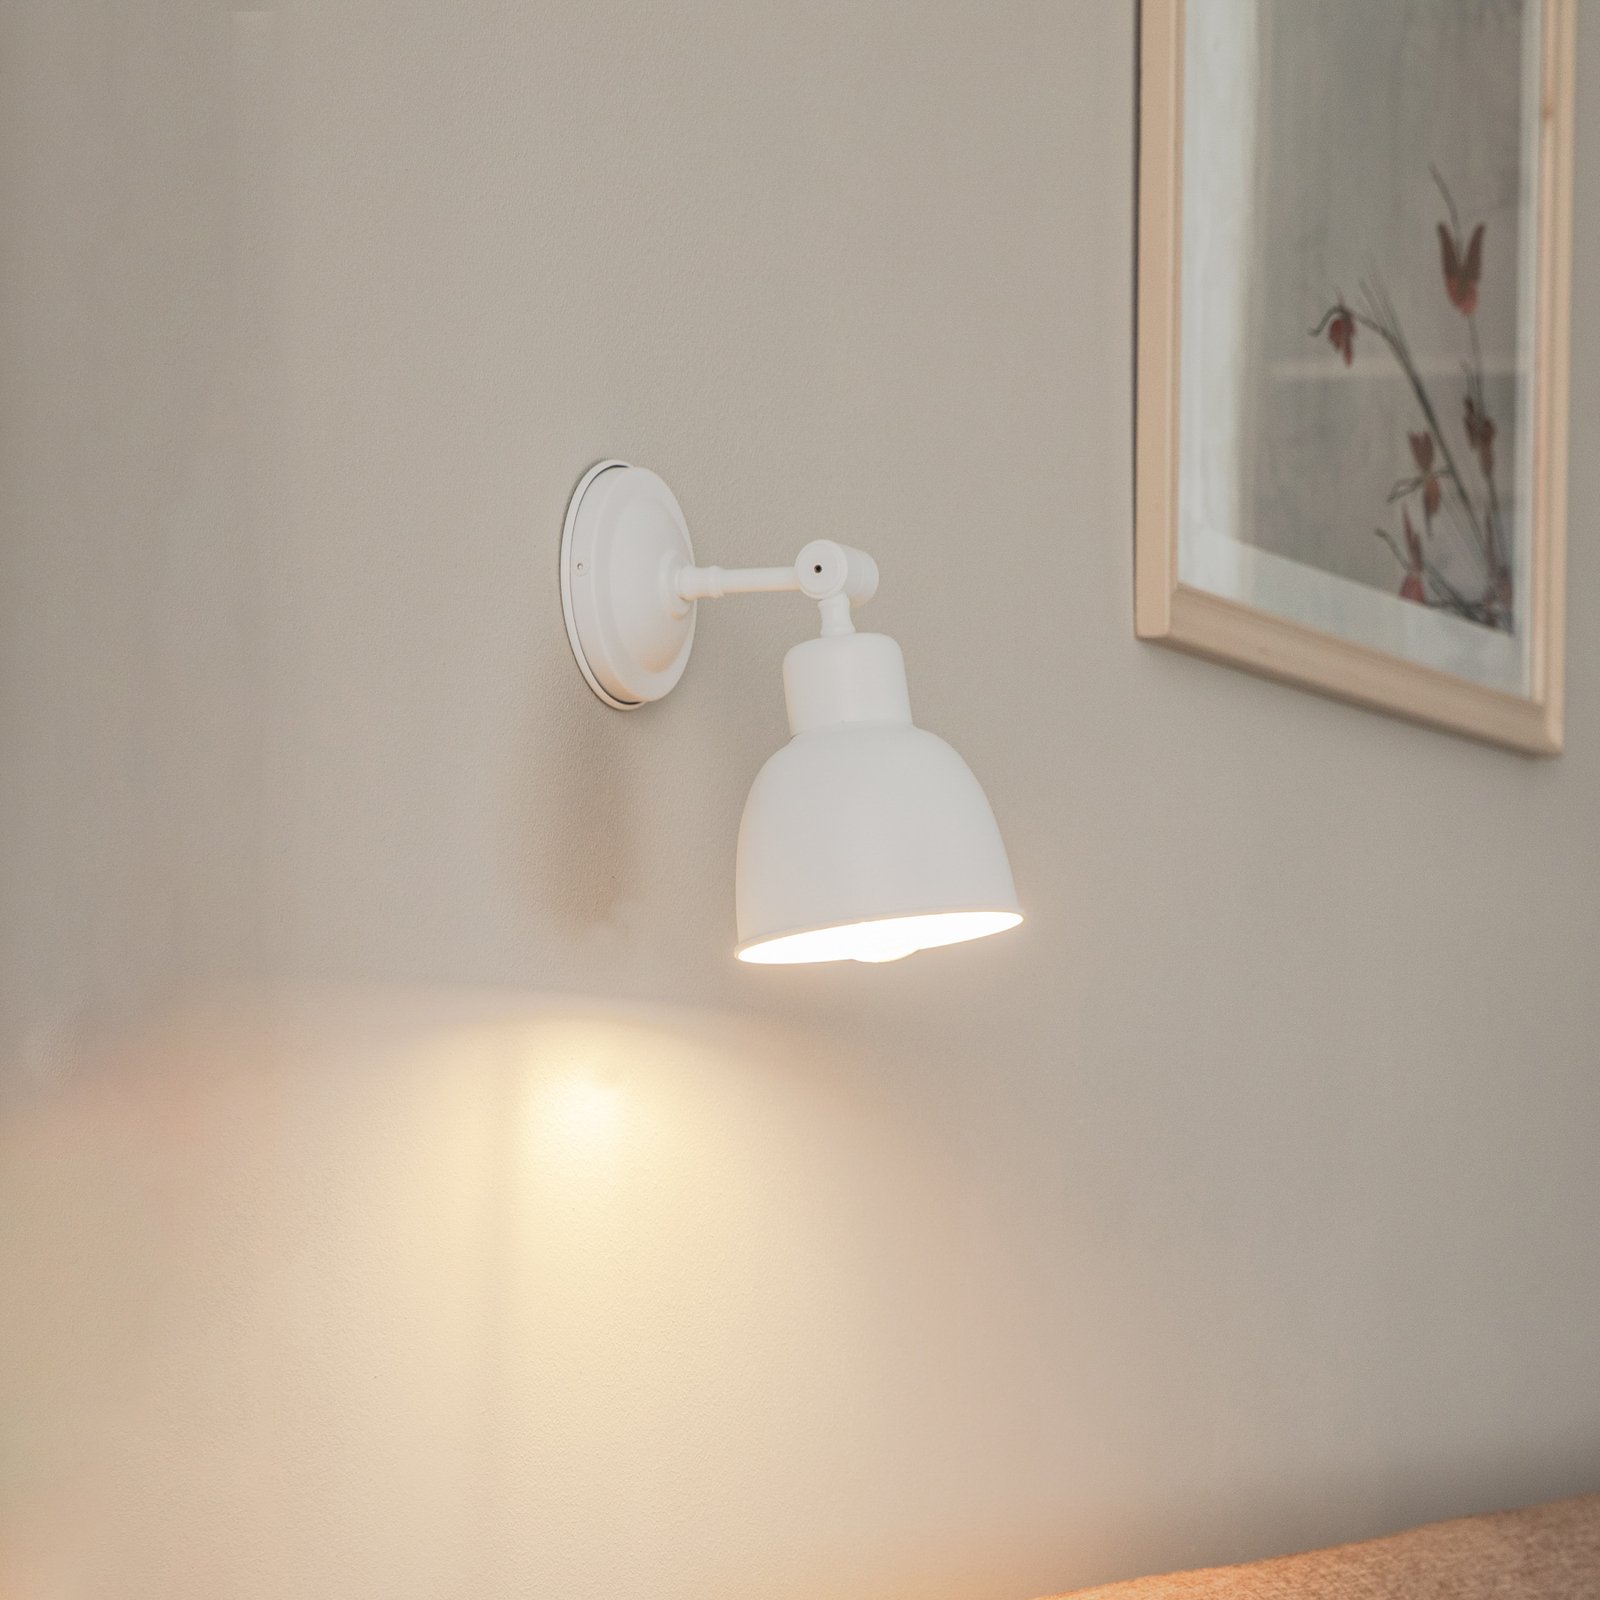 Emoti wall light, one-bulb, white